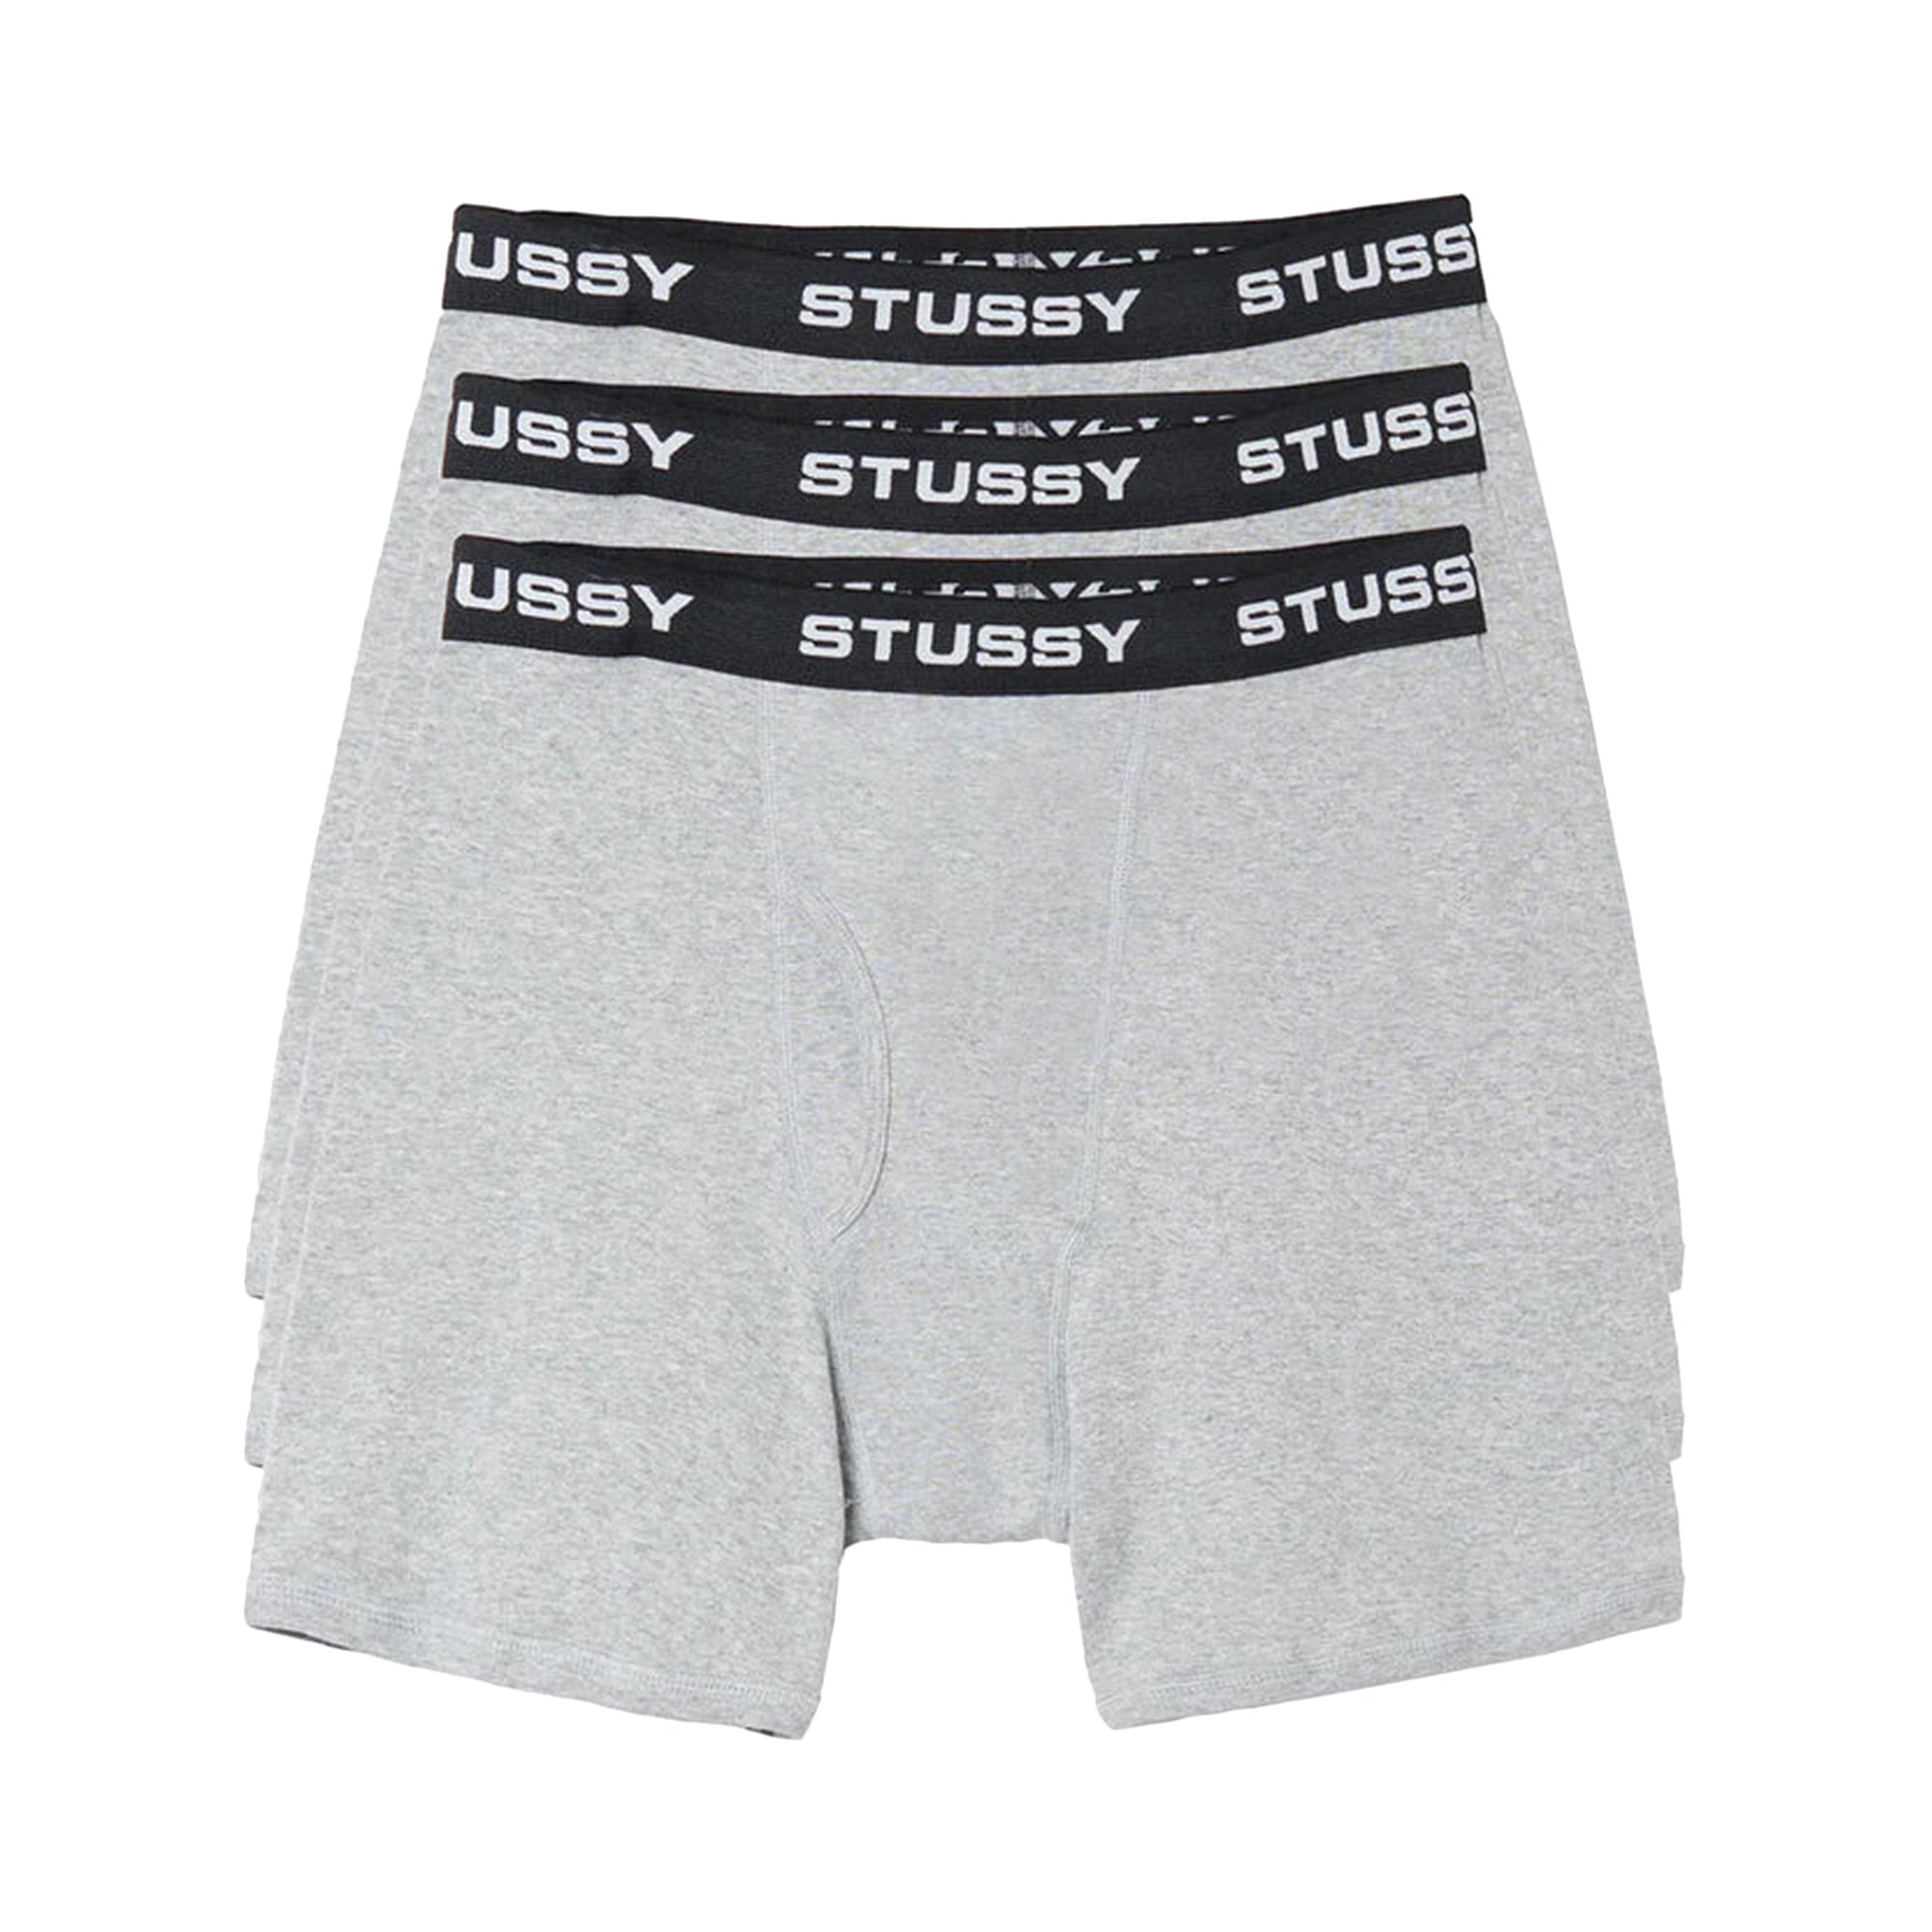 Buy Stussy Boxer Briefs (3 Pack) 'Grey Heather' - 112251 GREY | GOAT